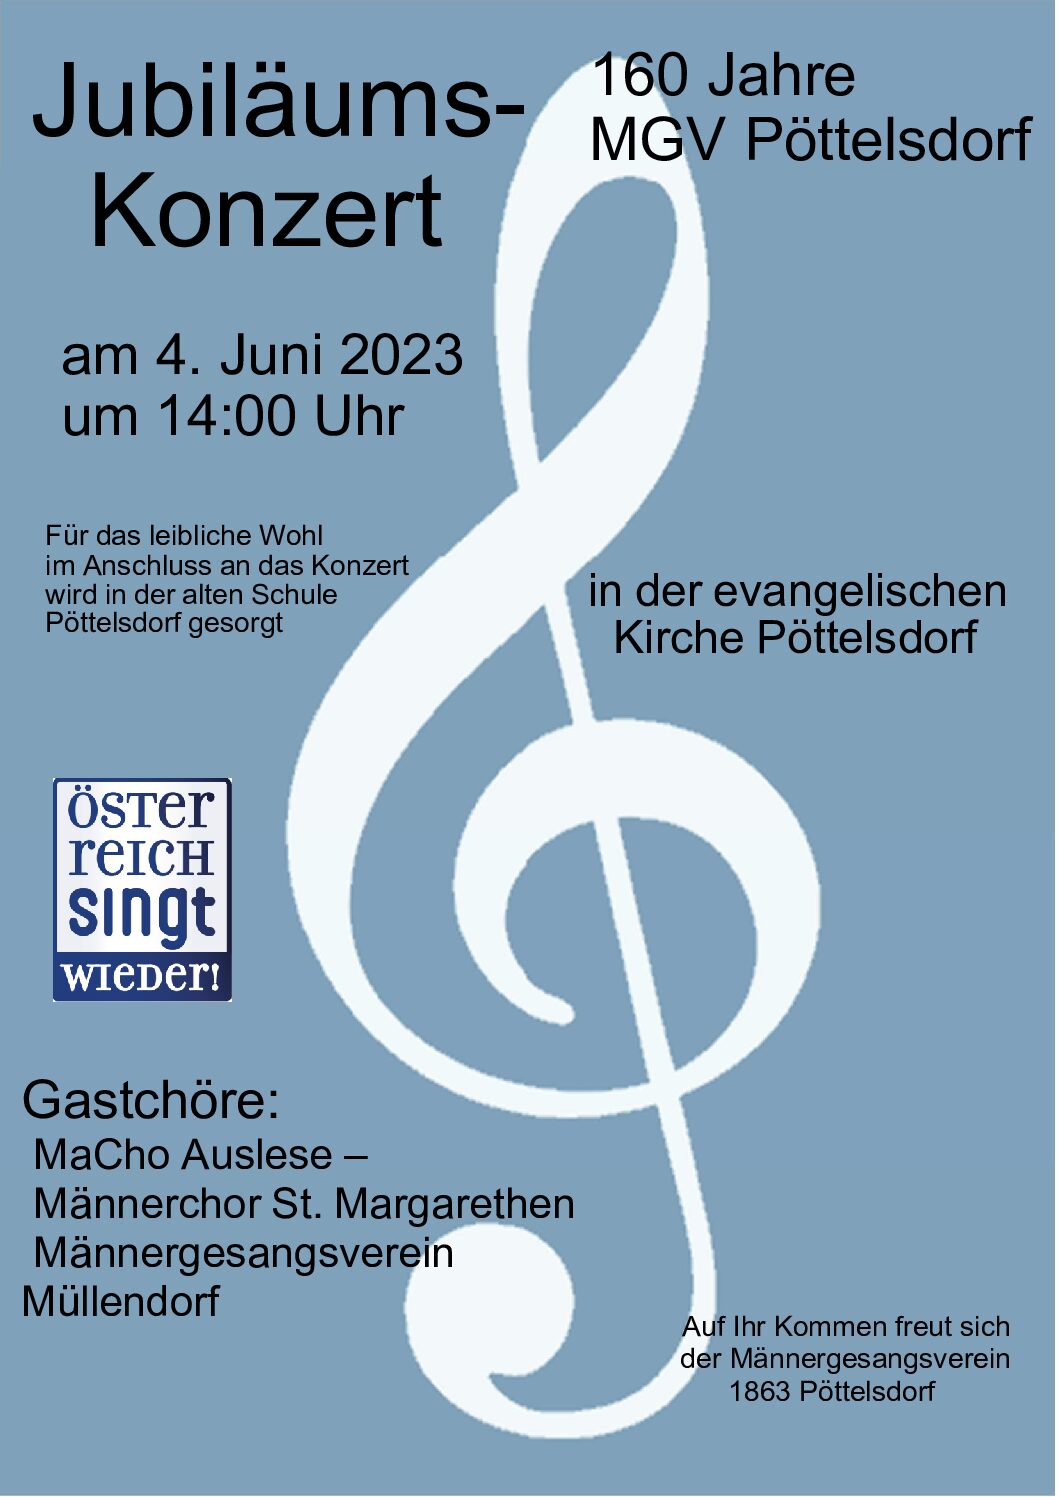 Jubiläums-Konzert 160 Jahre MGV Pöttelsdorf